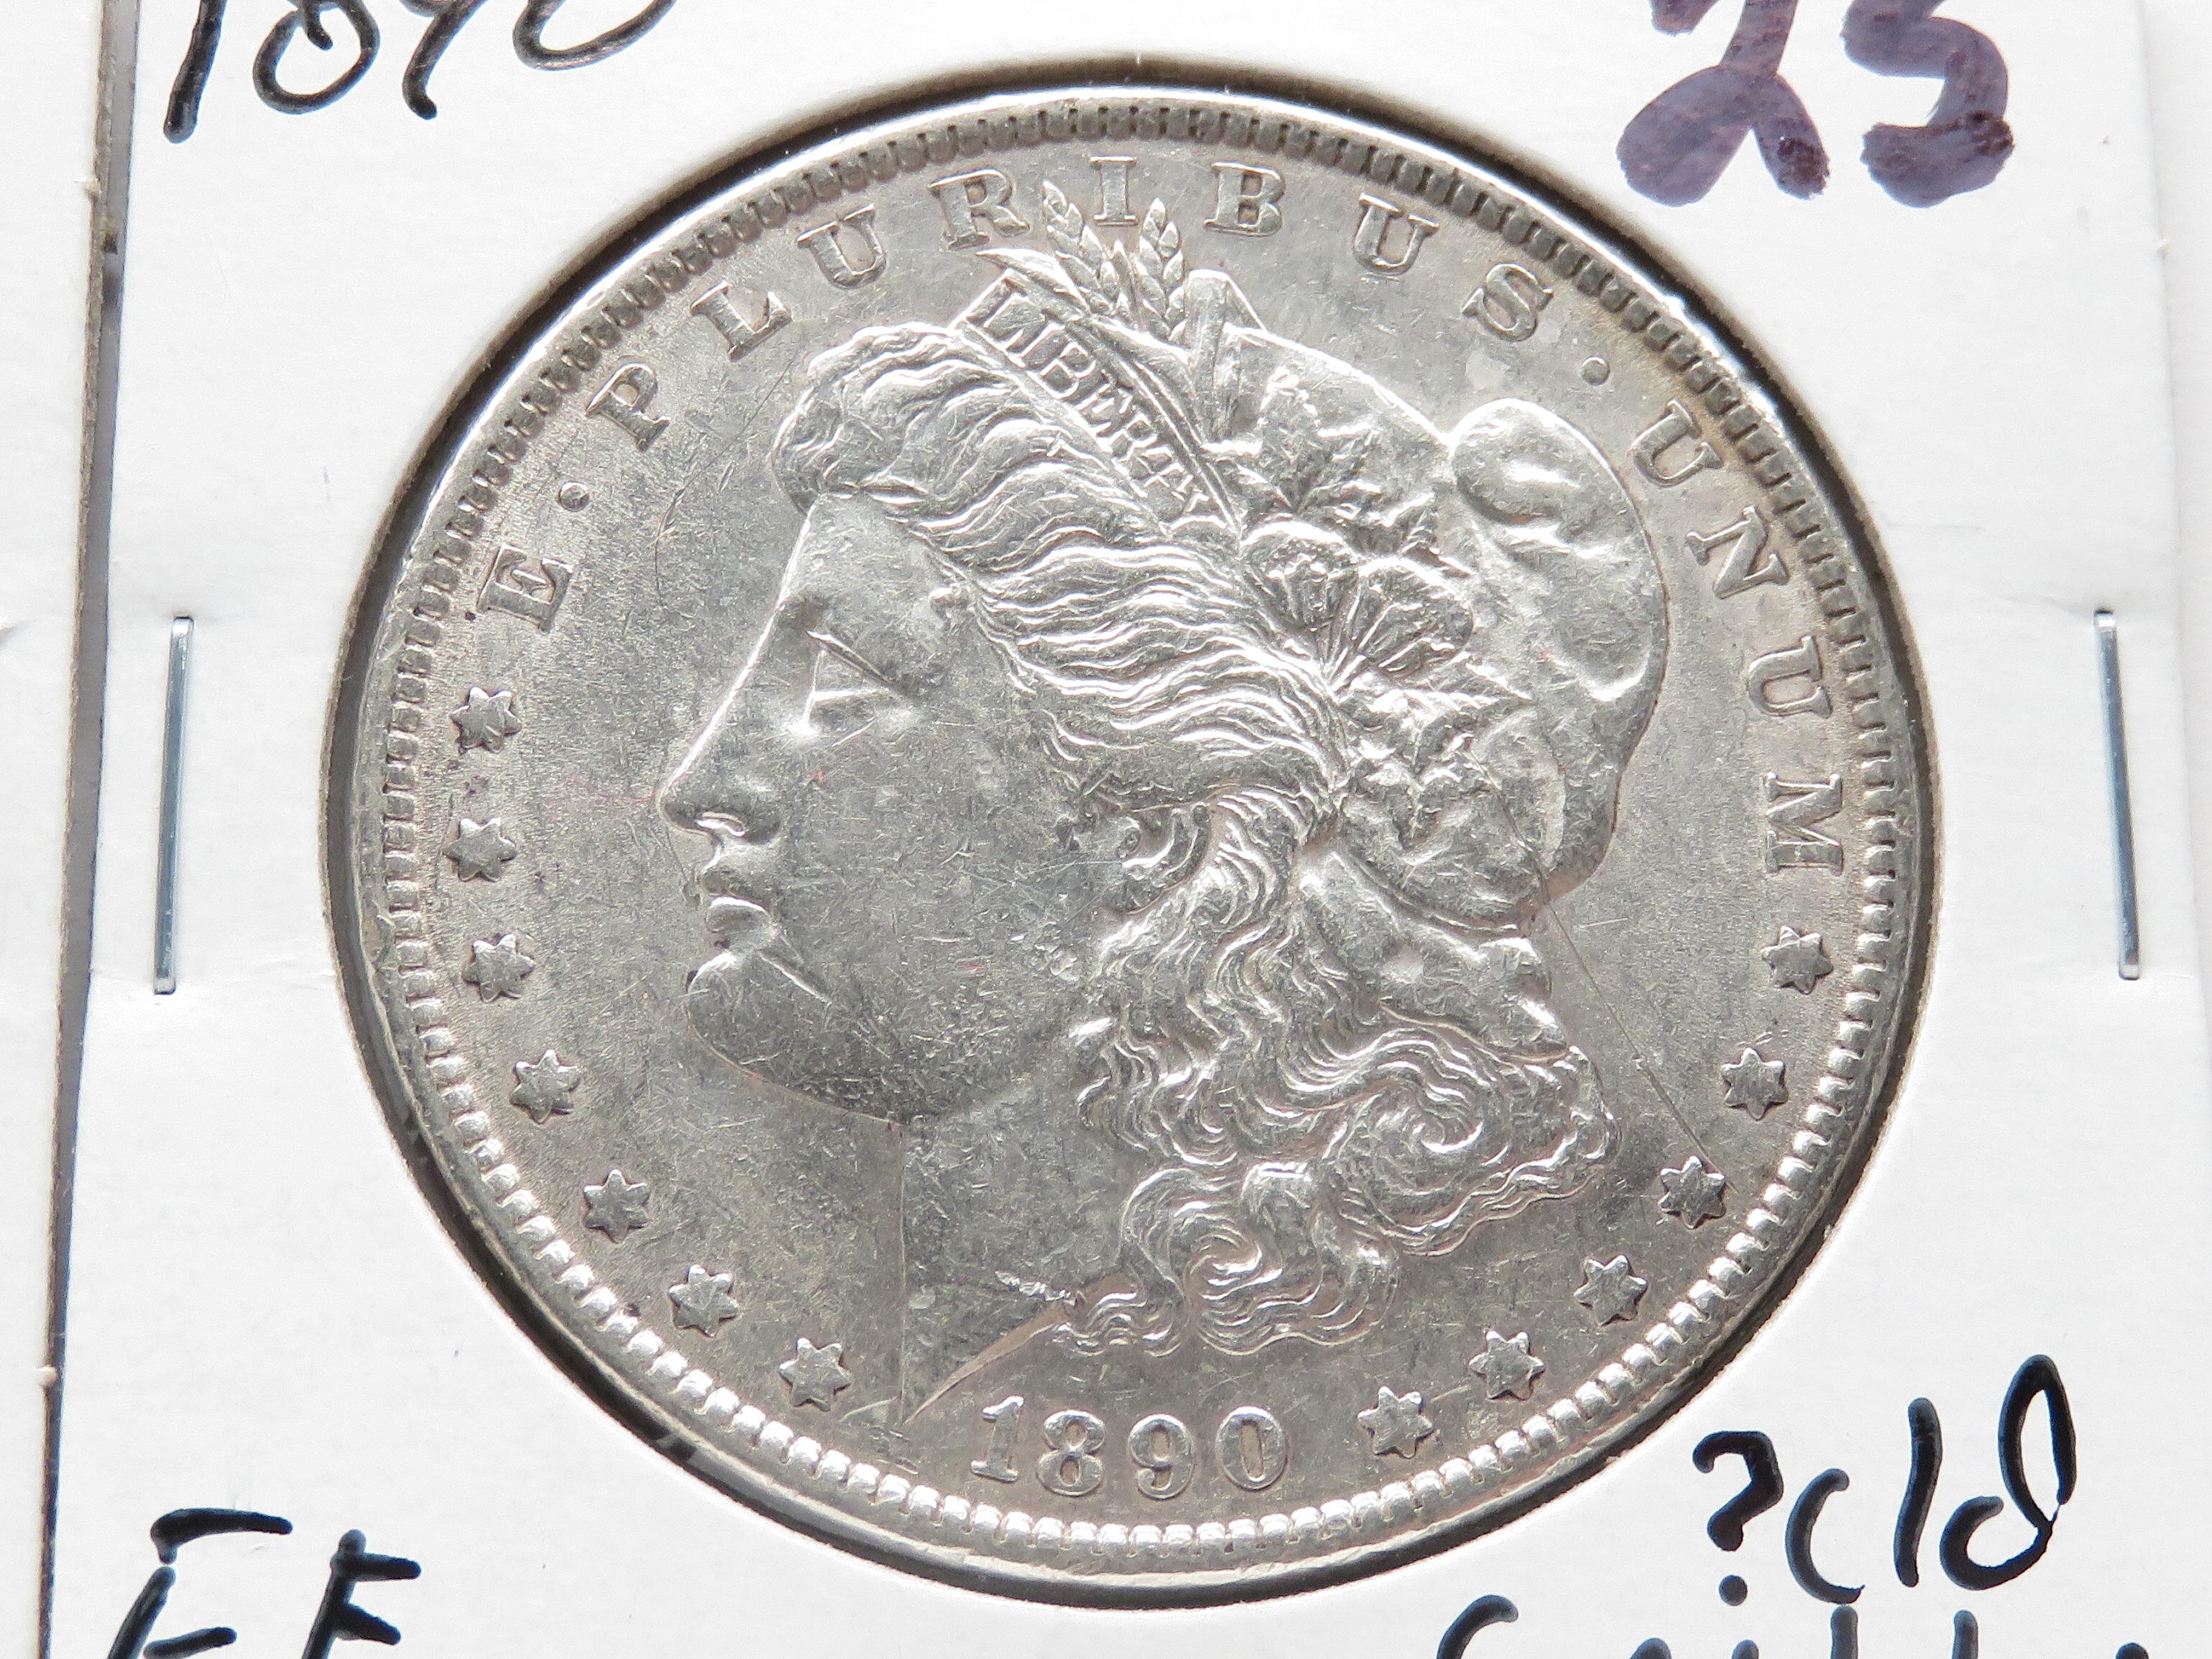 2 Morgan $: 1888-O AU clea, 1890 EF ?scrs clea